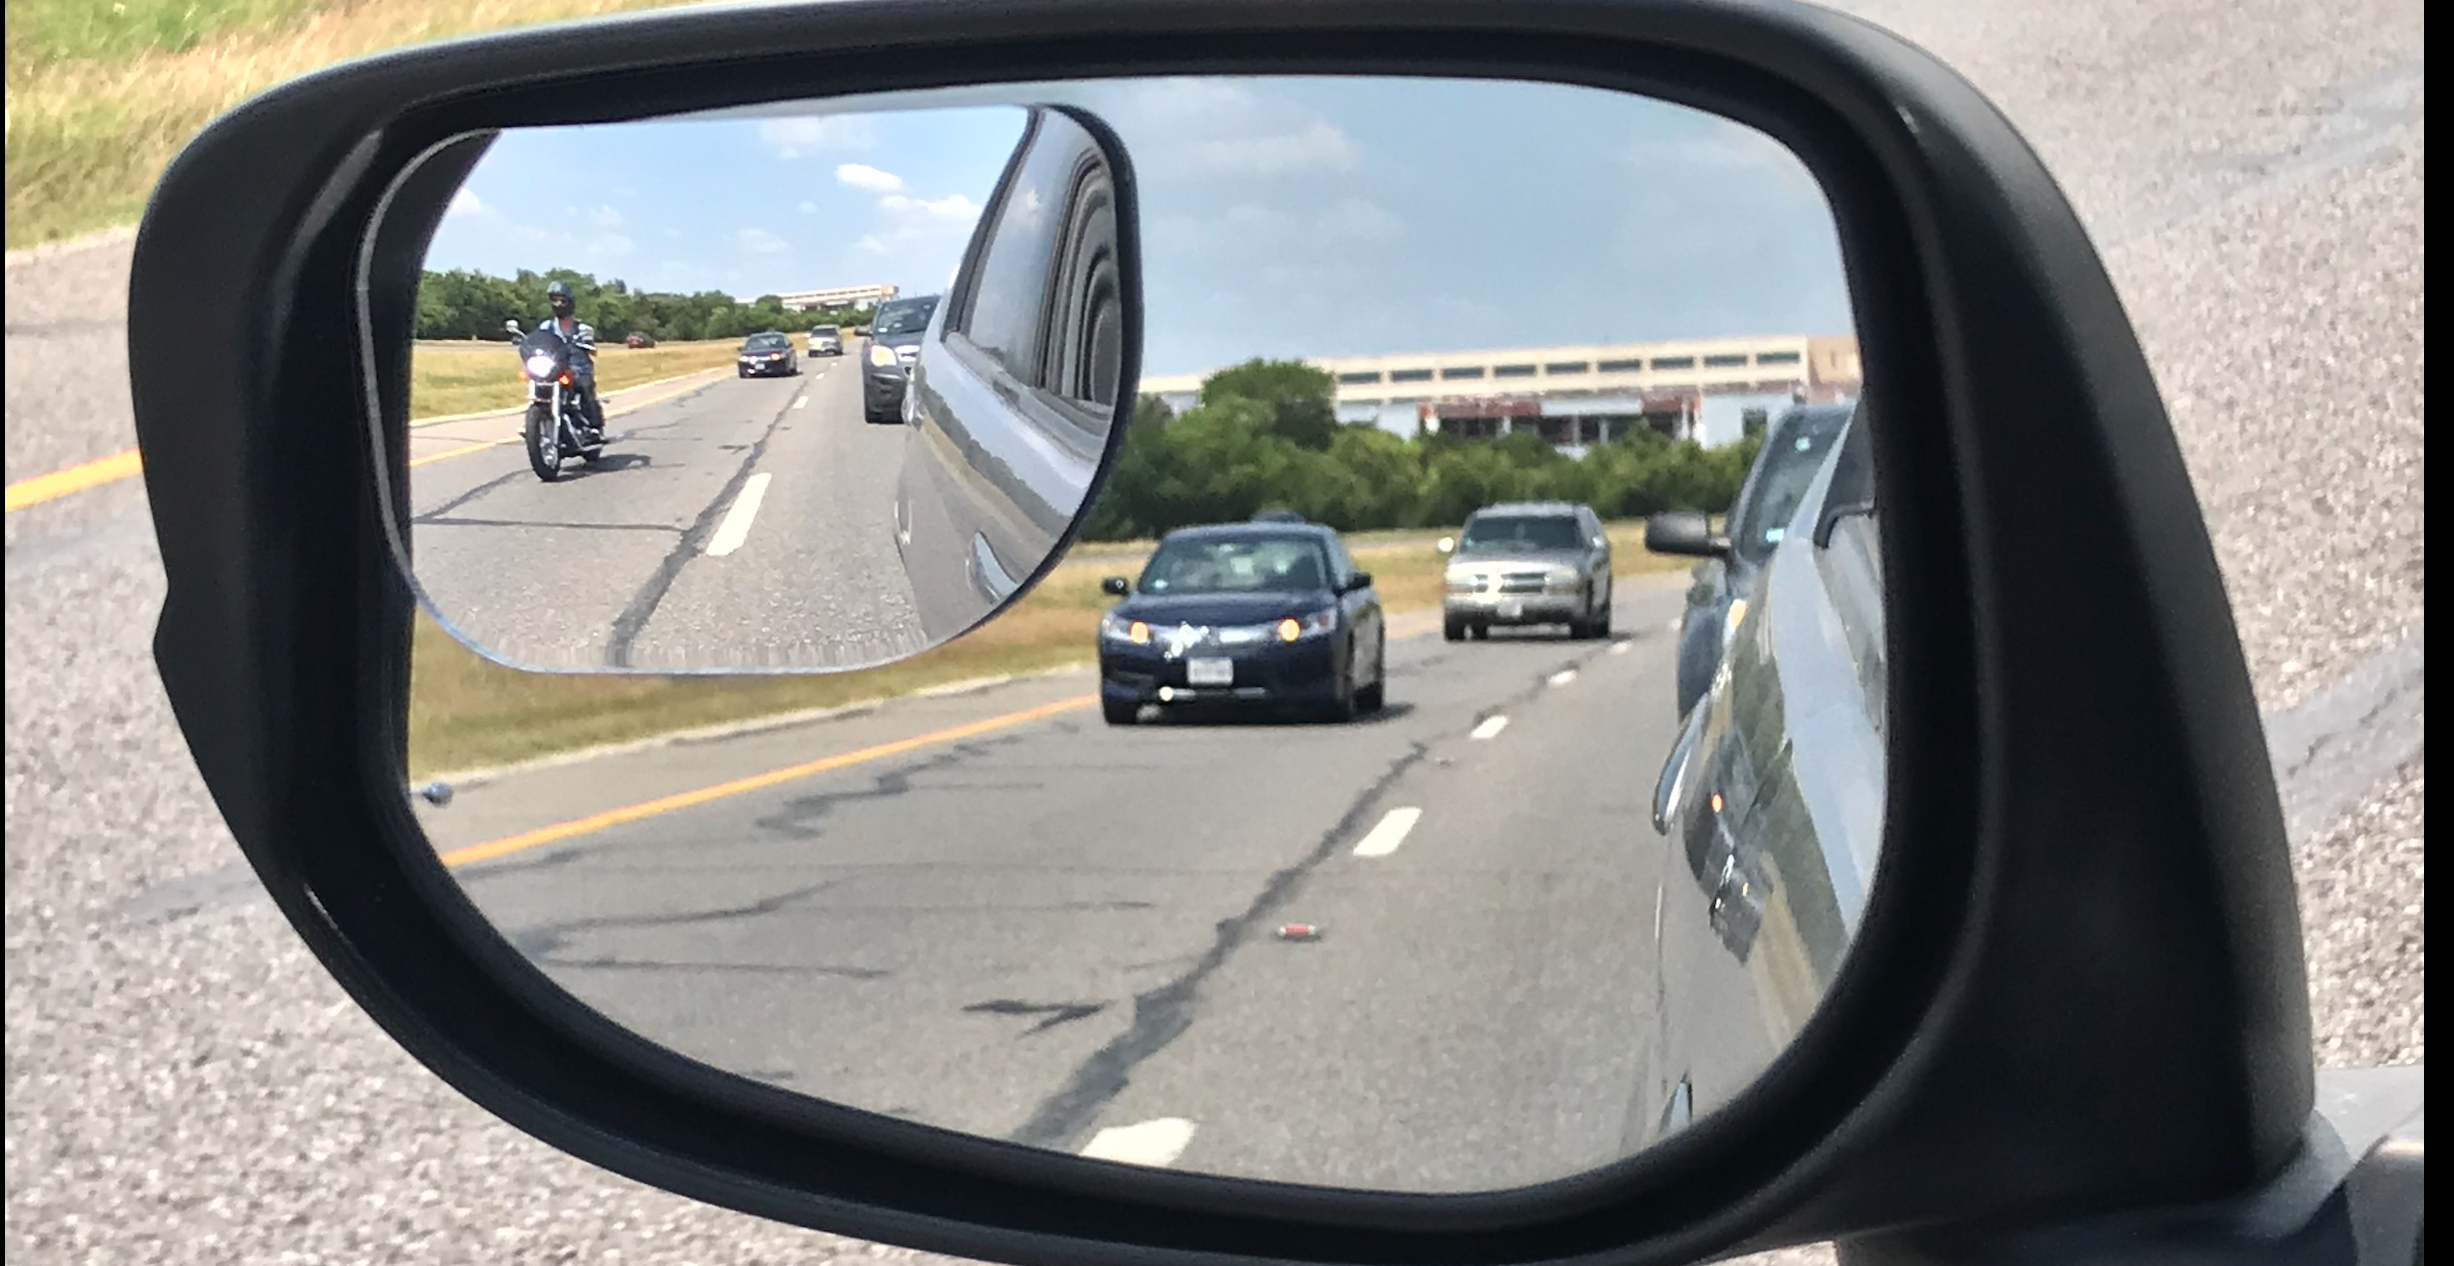 Utopicar Convex Blind Spot Mirrors 2 Pack - OEM Car Side Mirror Blindspot  Eliminator Automotive Exterior Accessories - Adjustable Blind Spot Mirror 